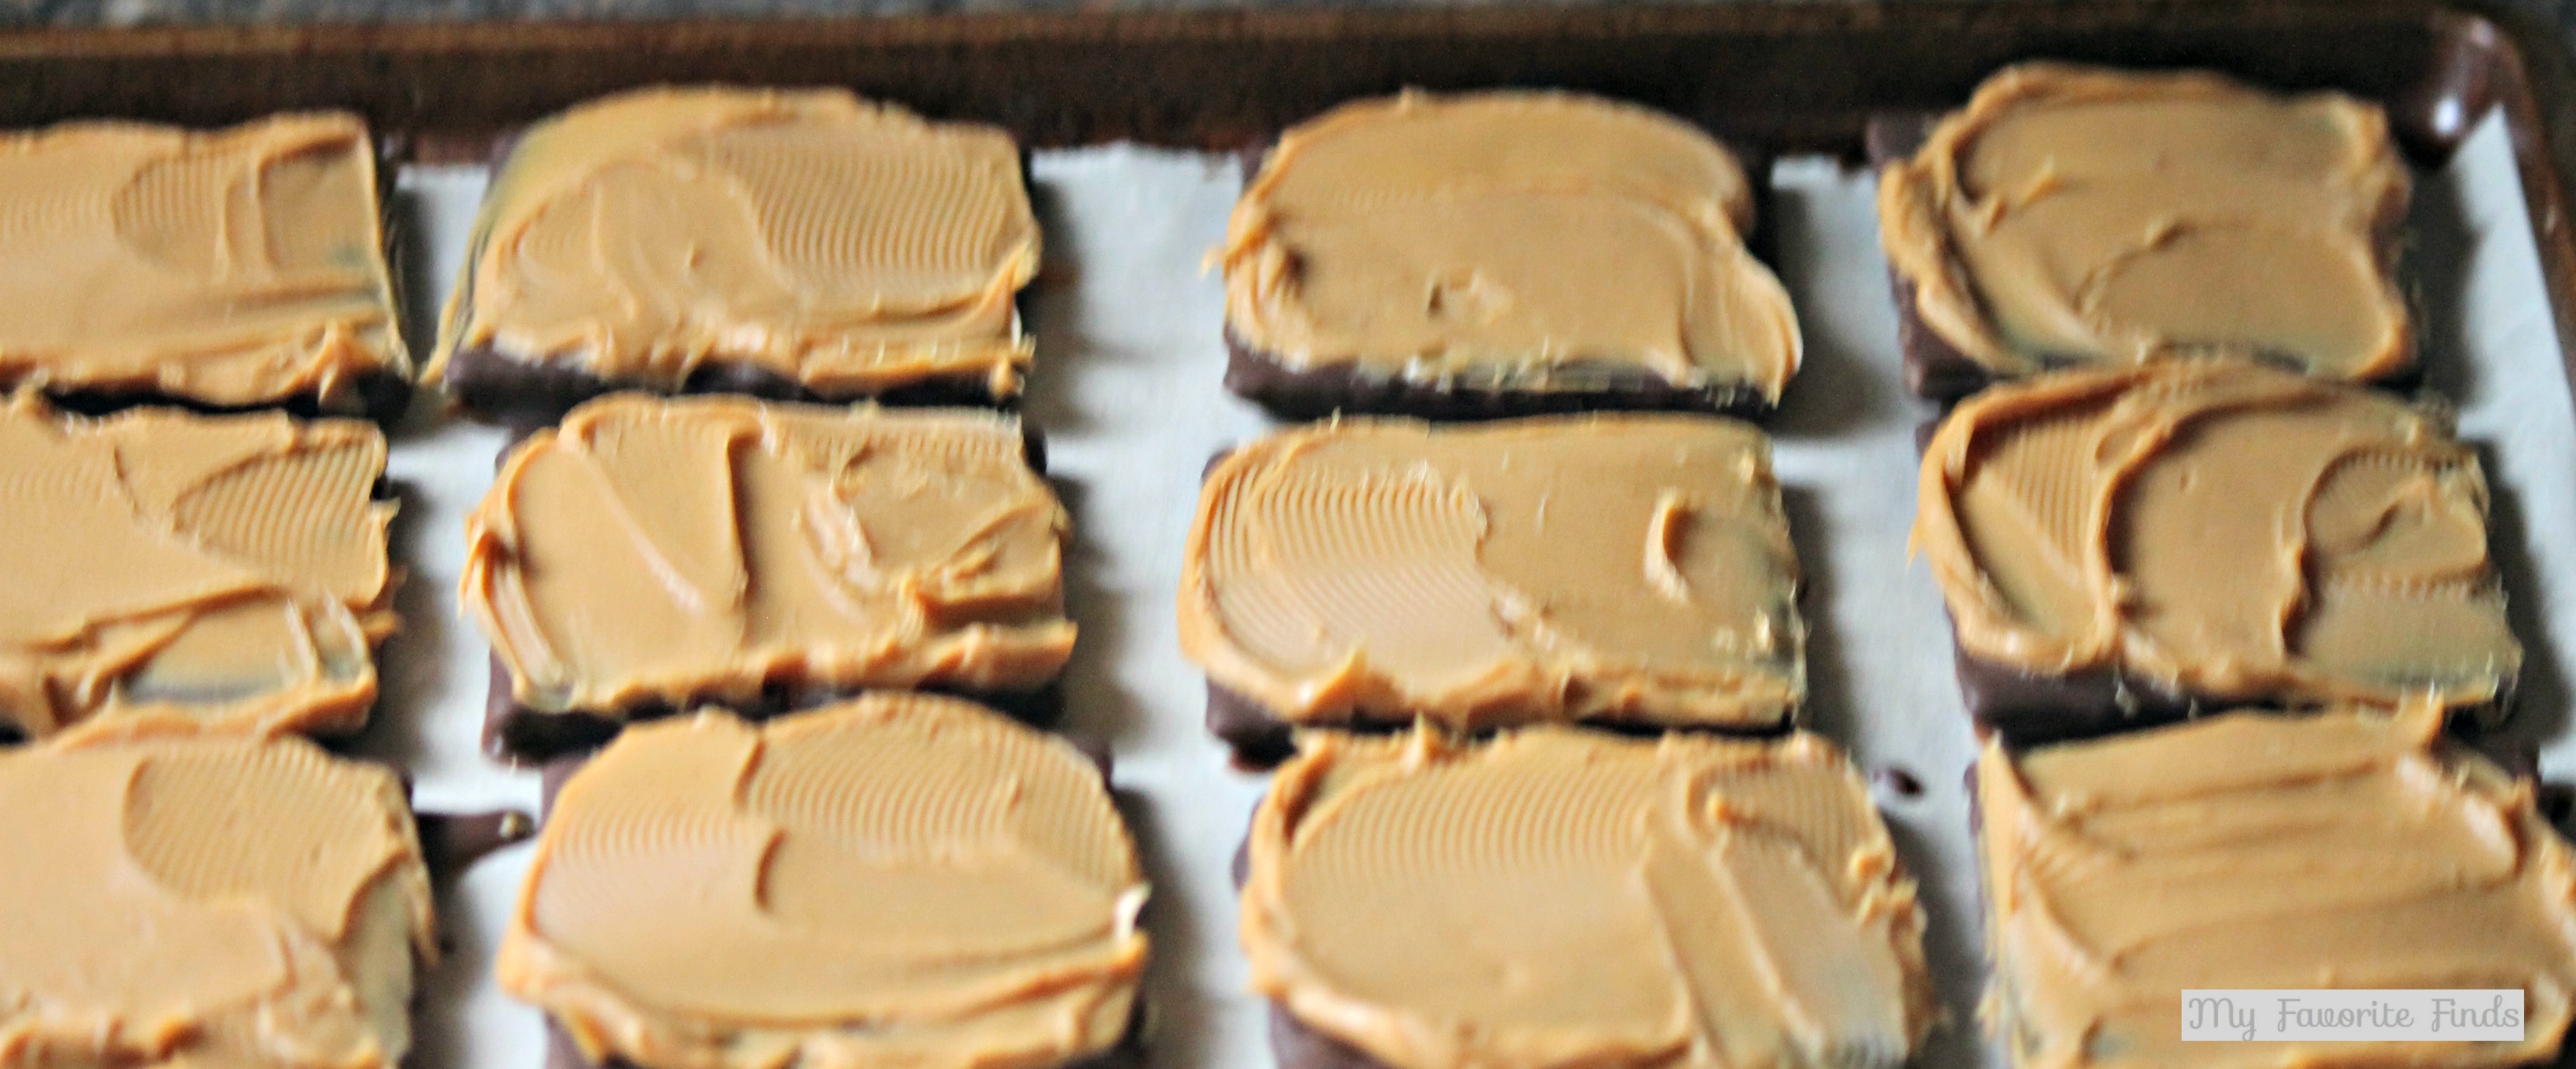 Peanut Butter Chocolate Sandwiches